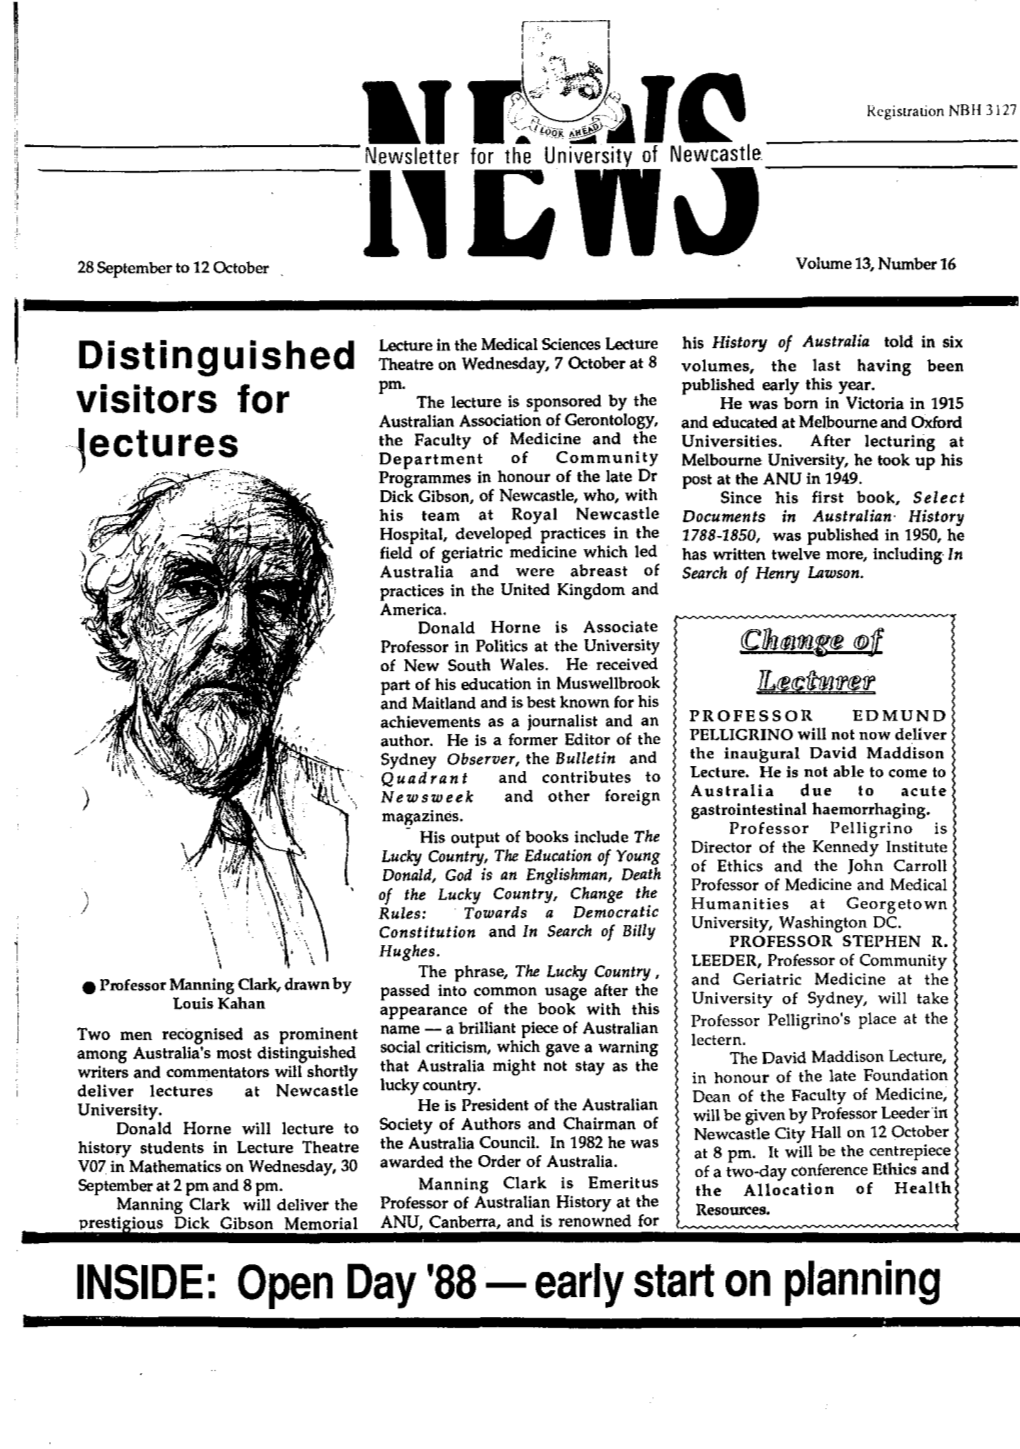 The University News, Vol. 13, No. 16, September 28 – October 12, 1987